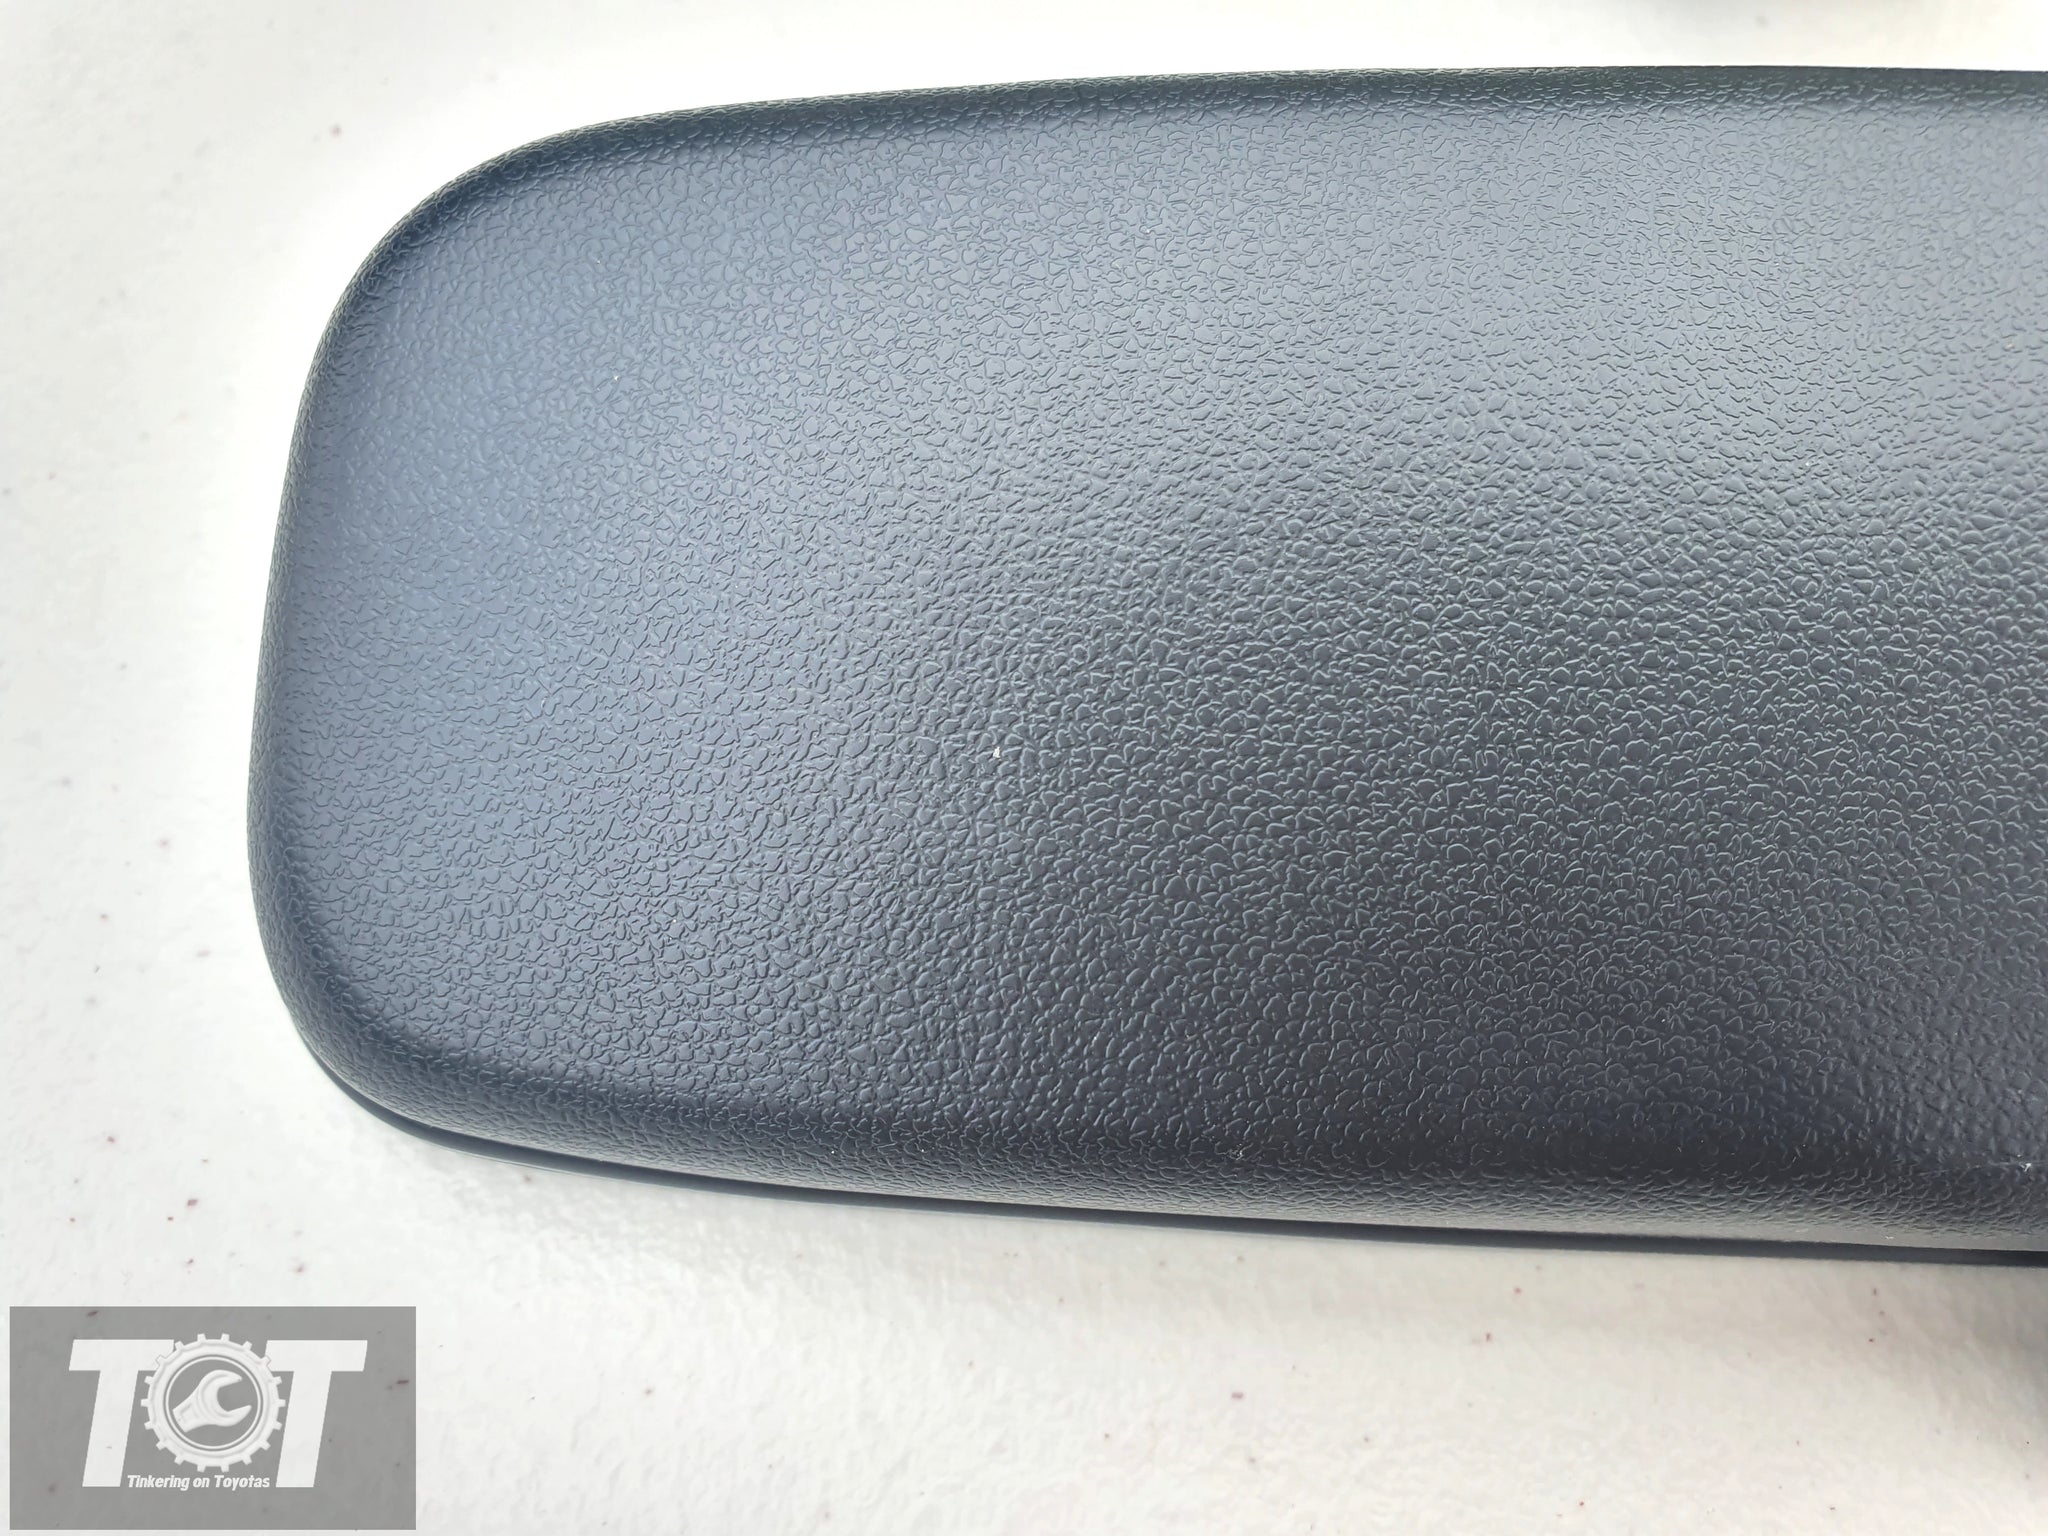 AE86 BLACK rear view mirror – Tinkering On Toyotas